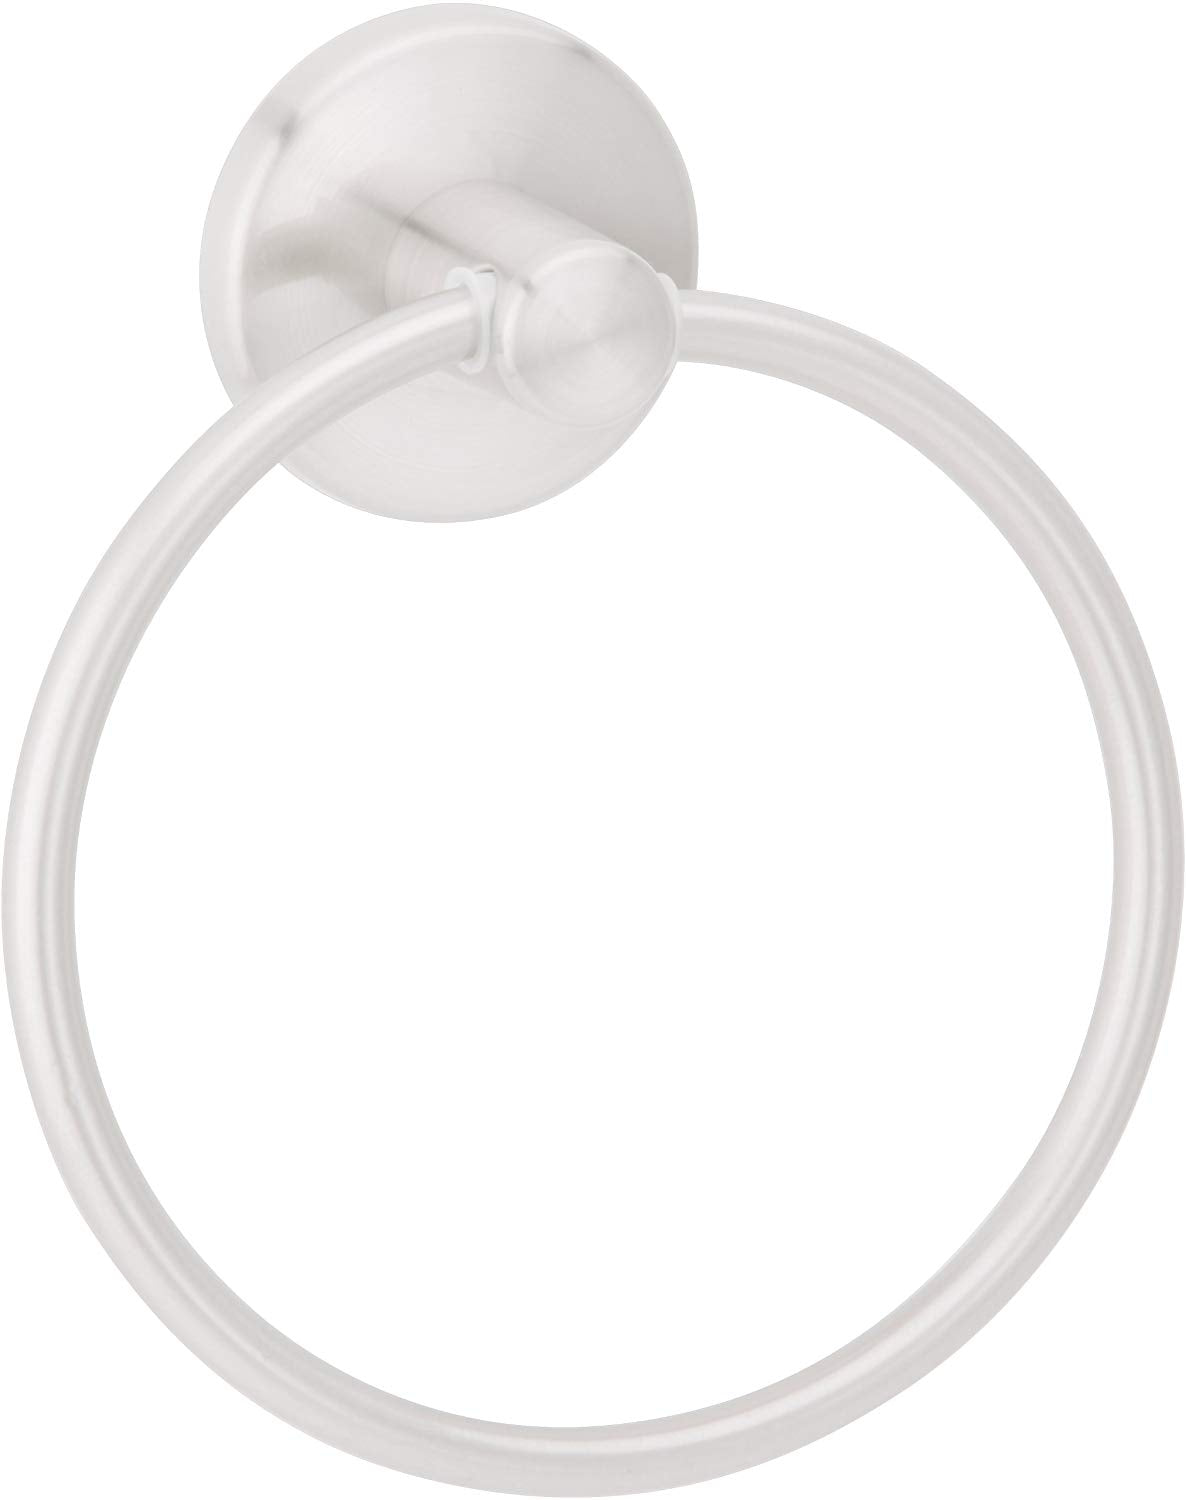 Taymor 02-D6604W Venice Series White Towel Ring